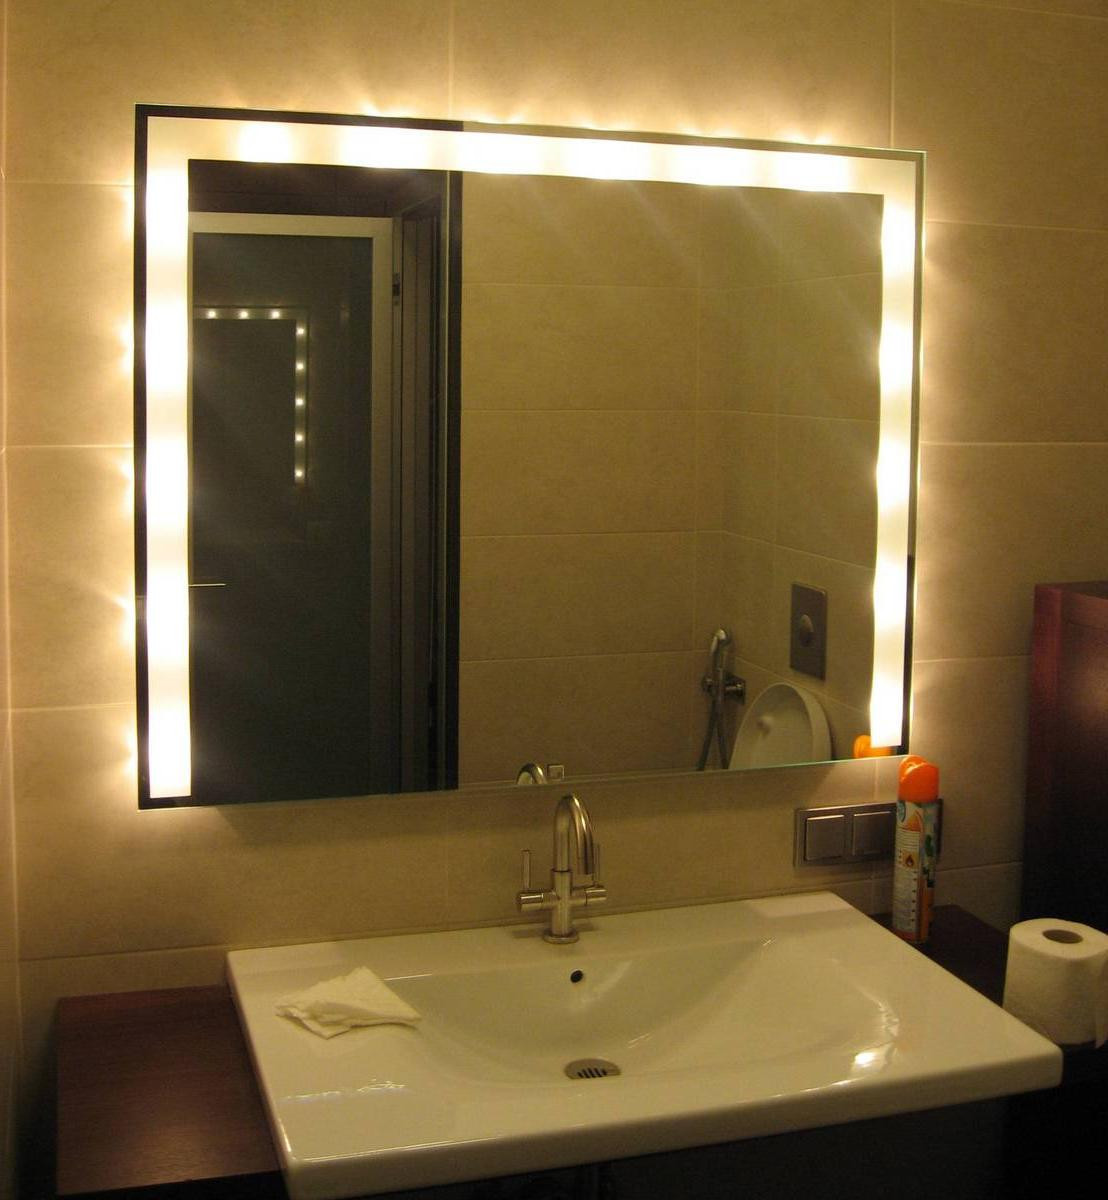 Led Bathroom Lighting
 amazing bathroom led lighting design behind square mirror